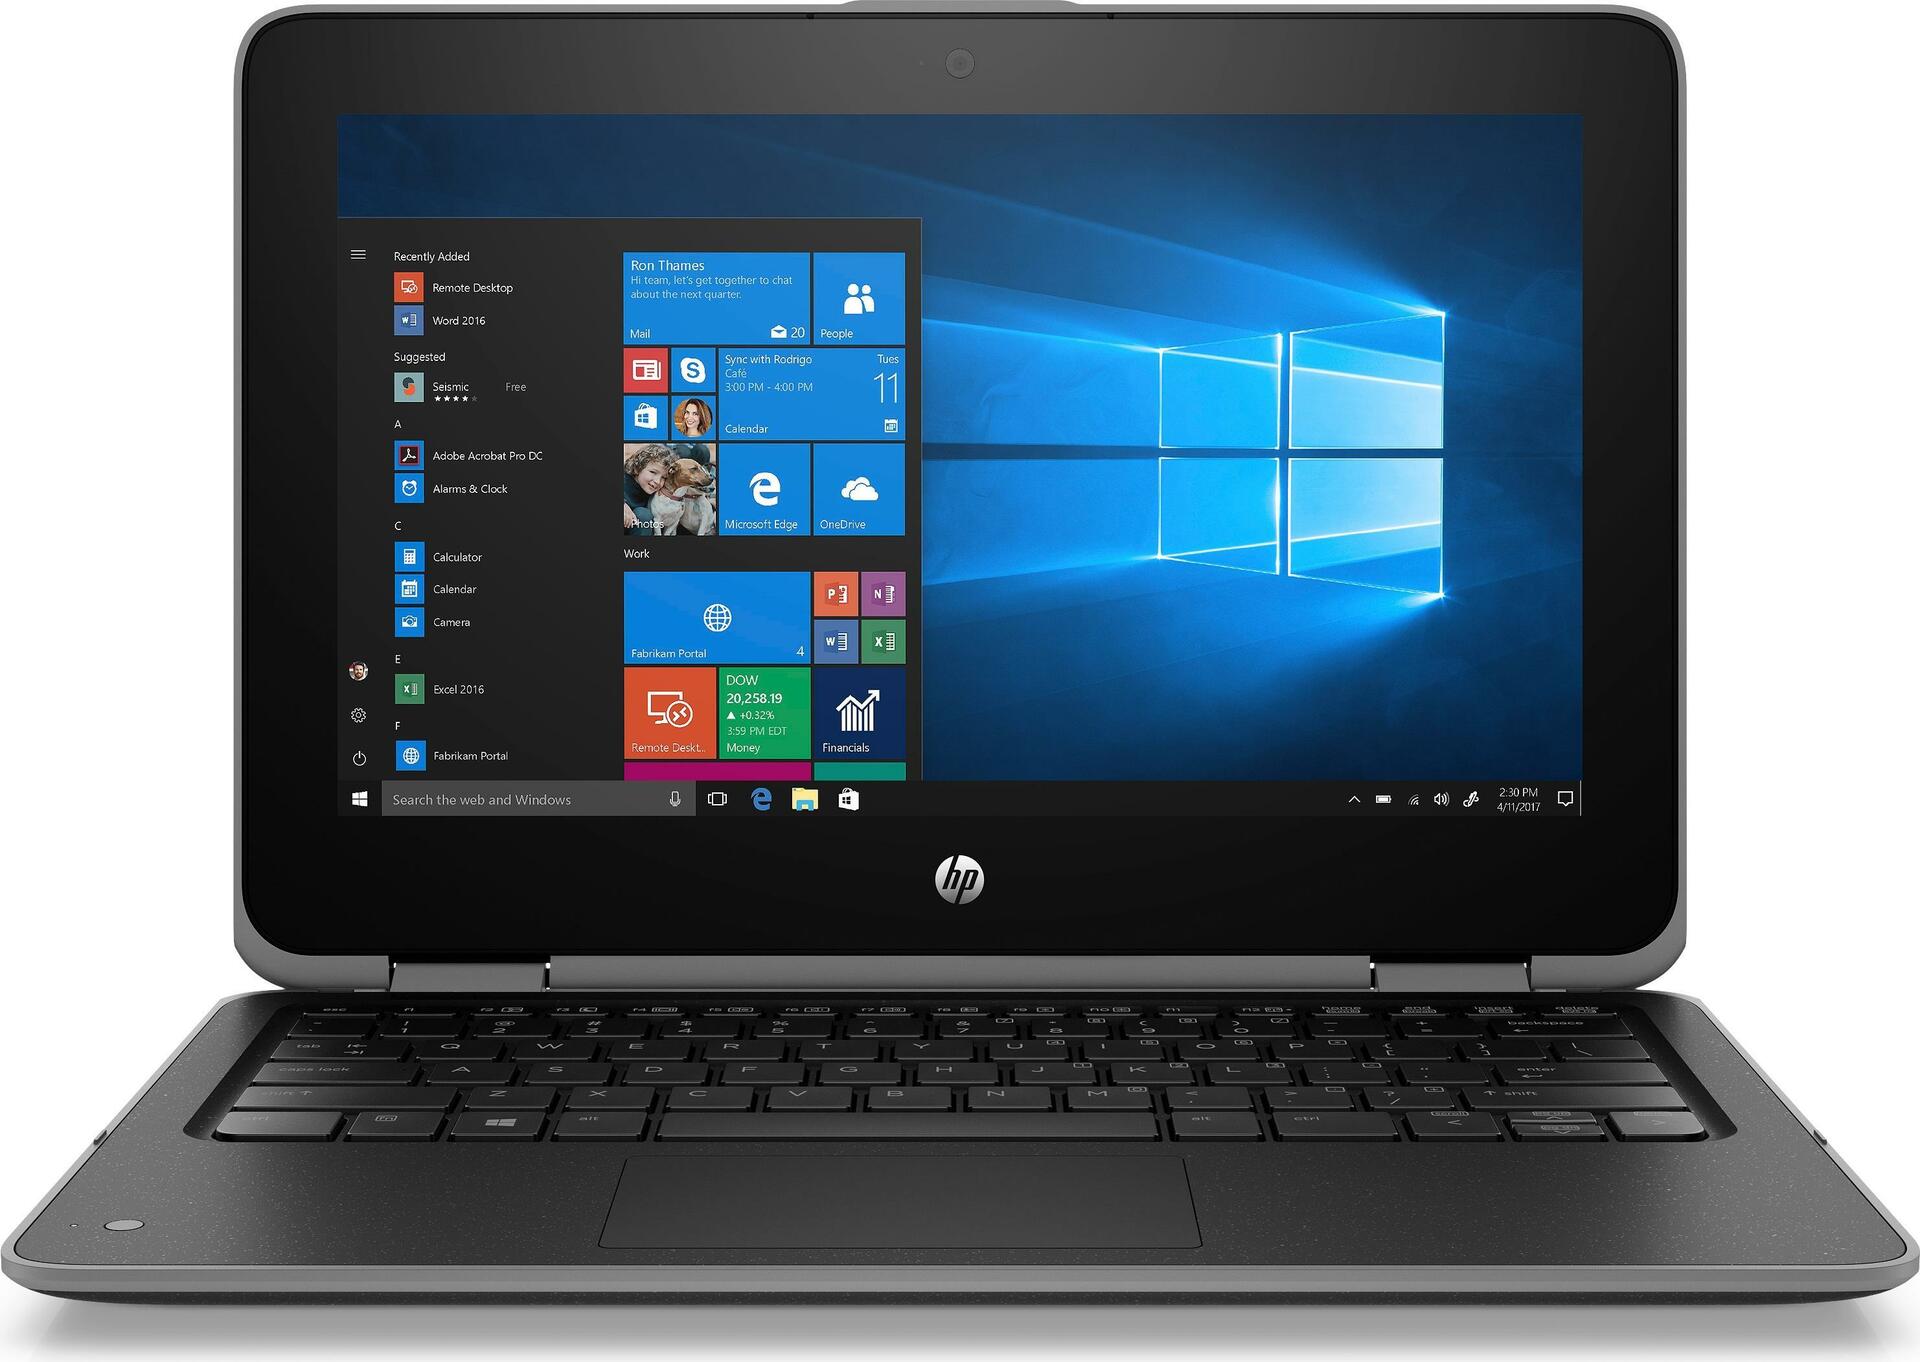 HP ProBook x360 11 G3 - Education Edition - Flip-Design - Pentium Silver N5000 / 1,1 GHz - Win 10 Home 64-Bit - 4GB RAM - 256GB SSD - 29,5 cm (11.6